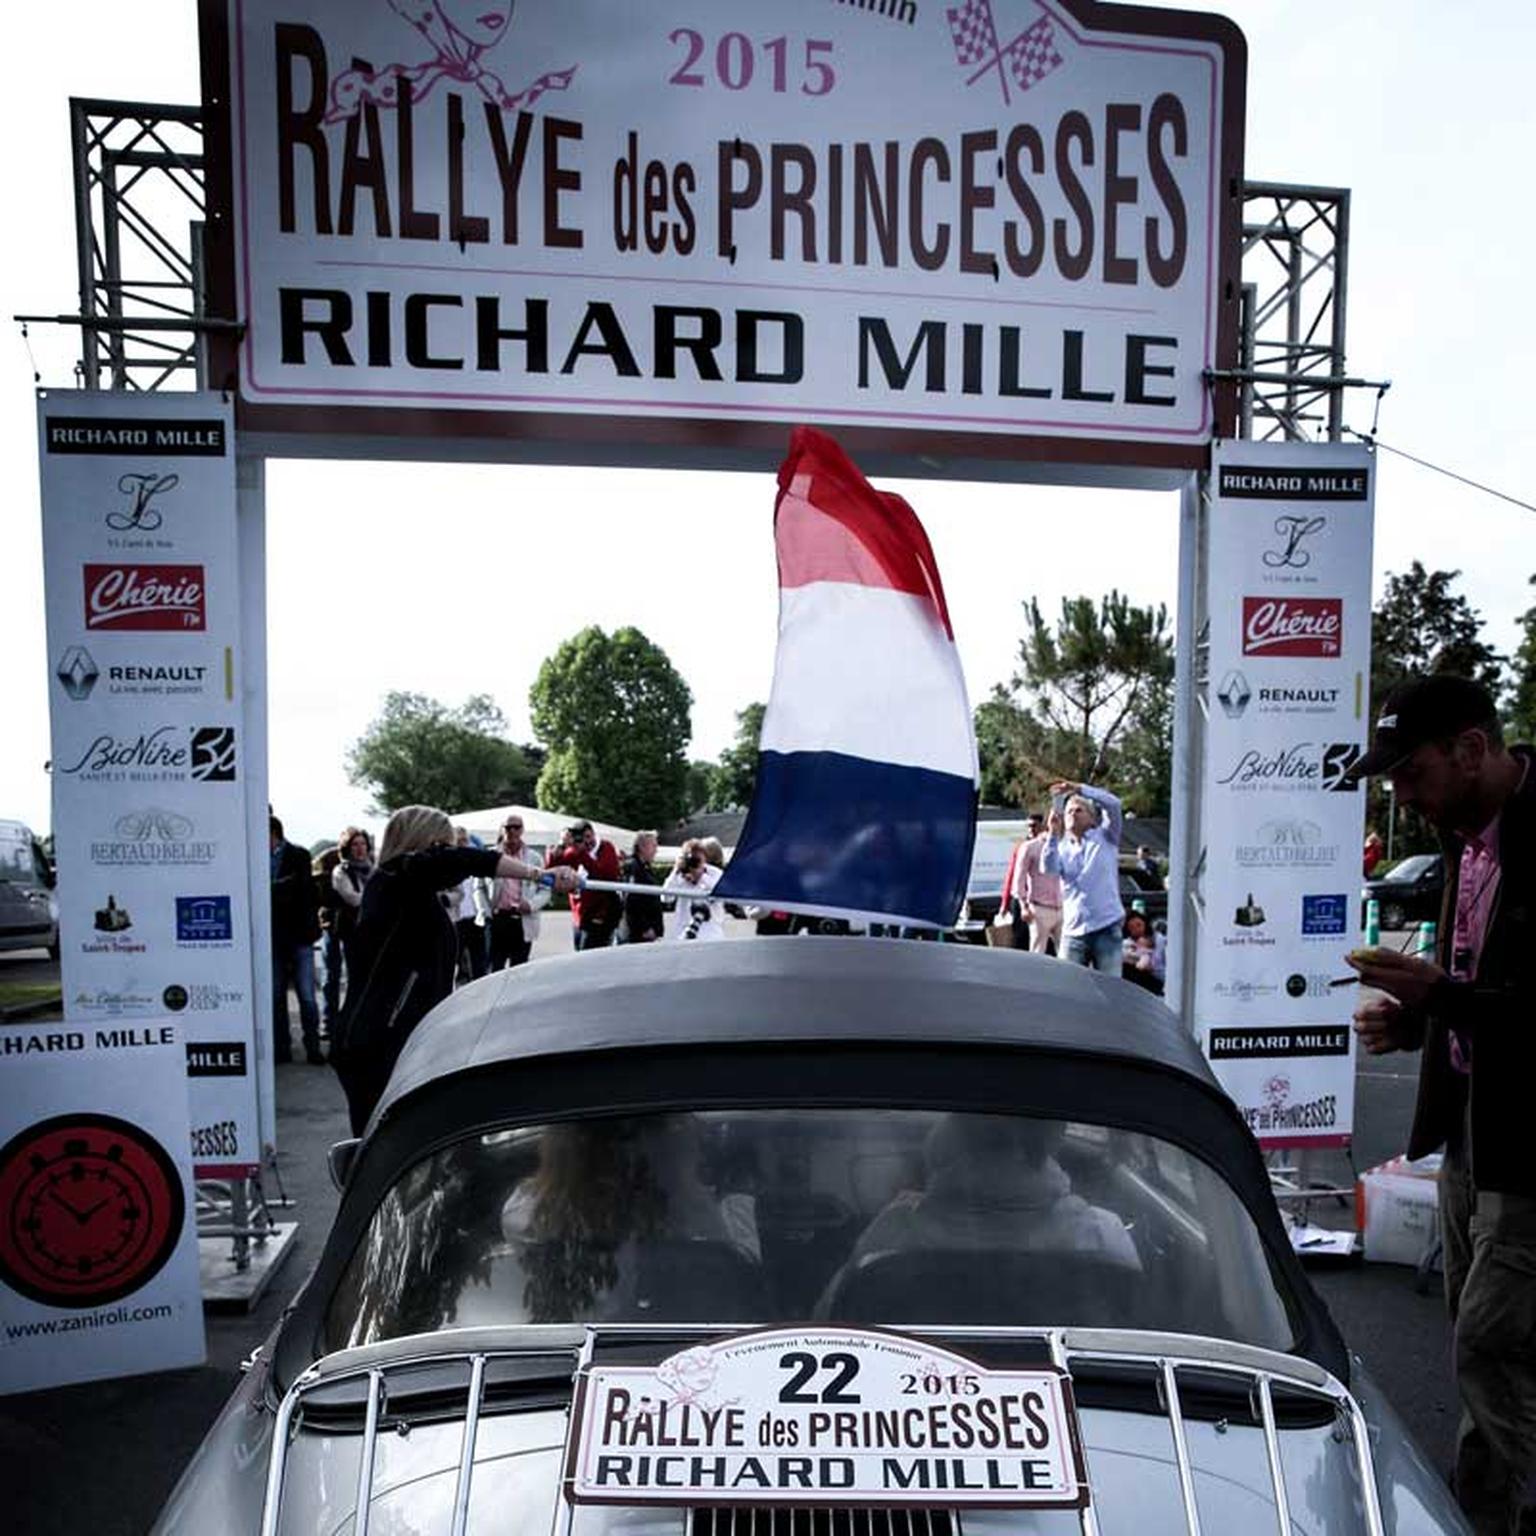 Richard Mille at Rallye des Princesses, image courtesy of Didier Gourdon